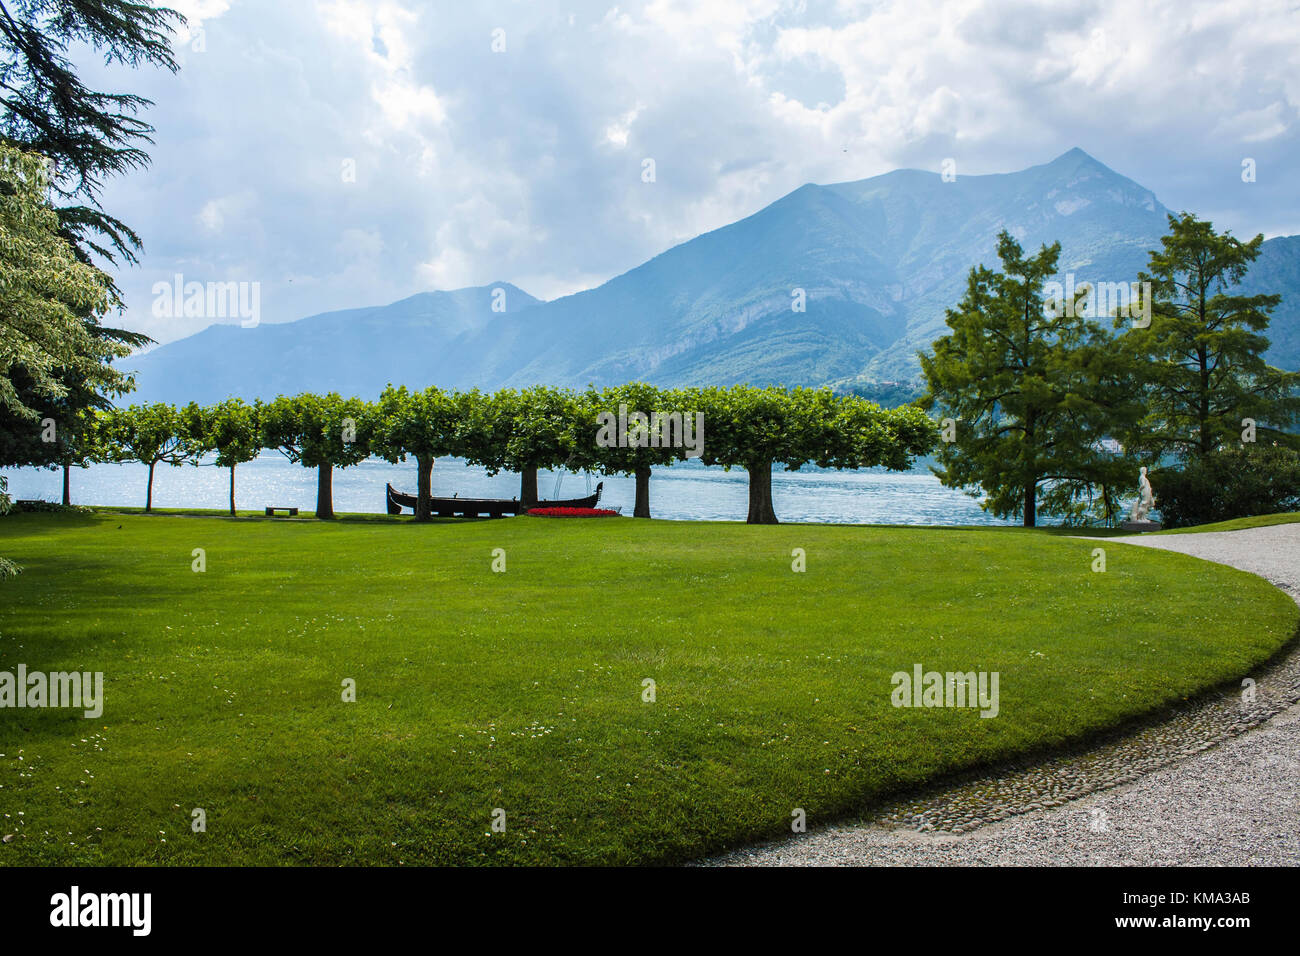 Bellagio city on Lake Como, Italy. Lombardy region. Italian famous landmark, Villa Melzi Park. Botanic Garden plants and trees Stock Photo